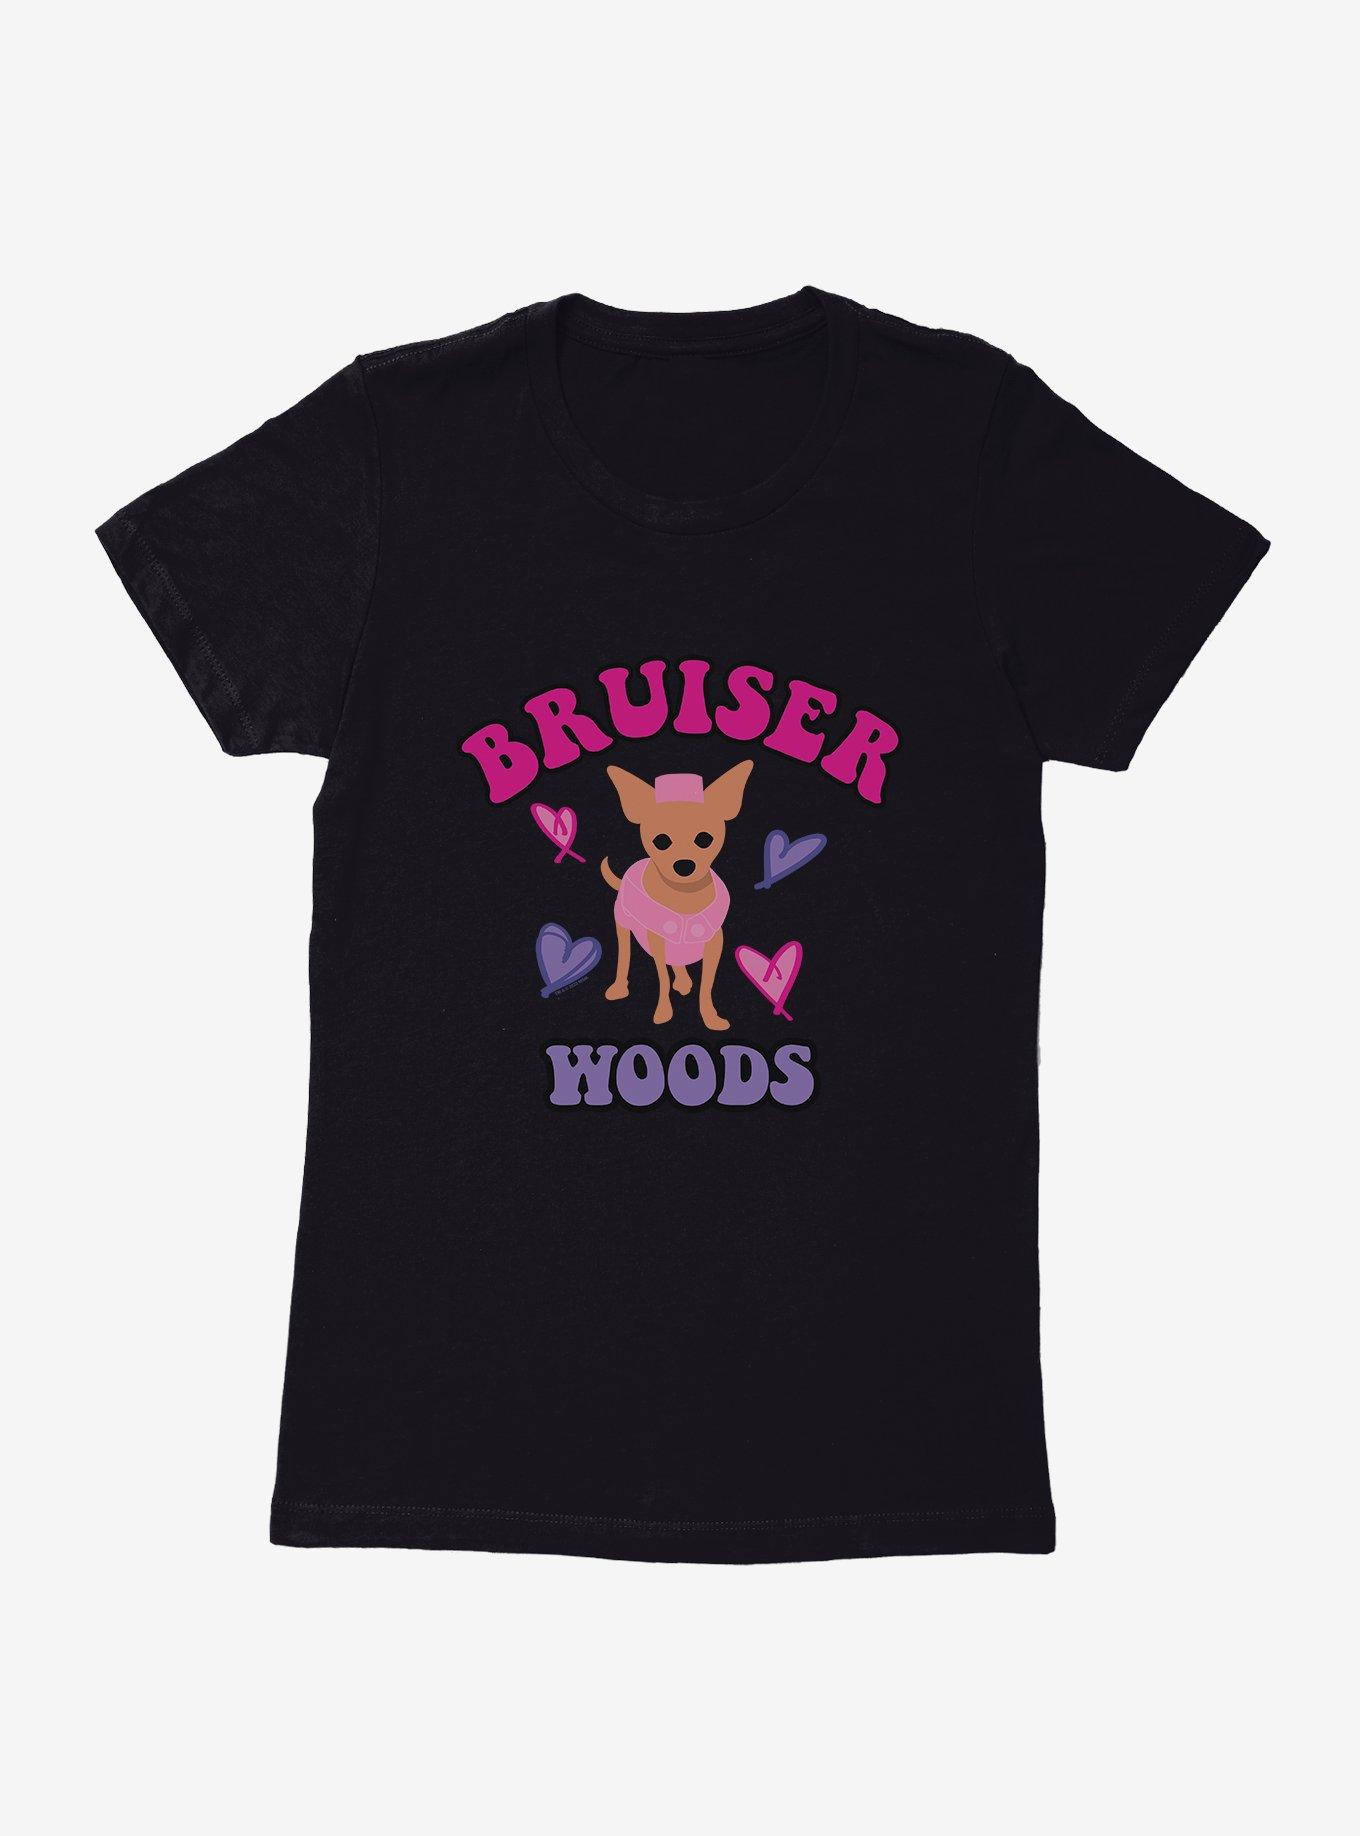 Legally Blonde Bruiser Woods Womens T-Shirt, , hi-res